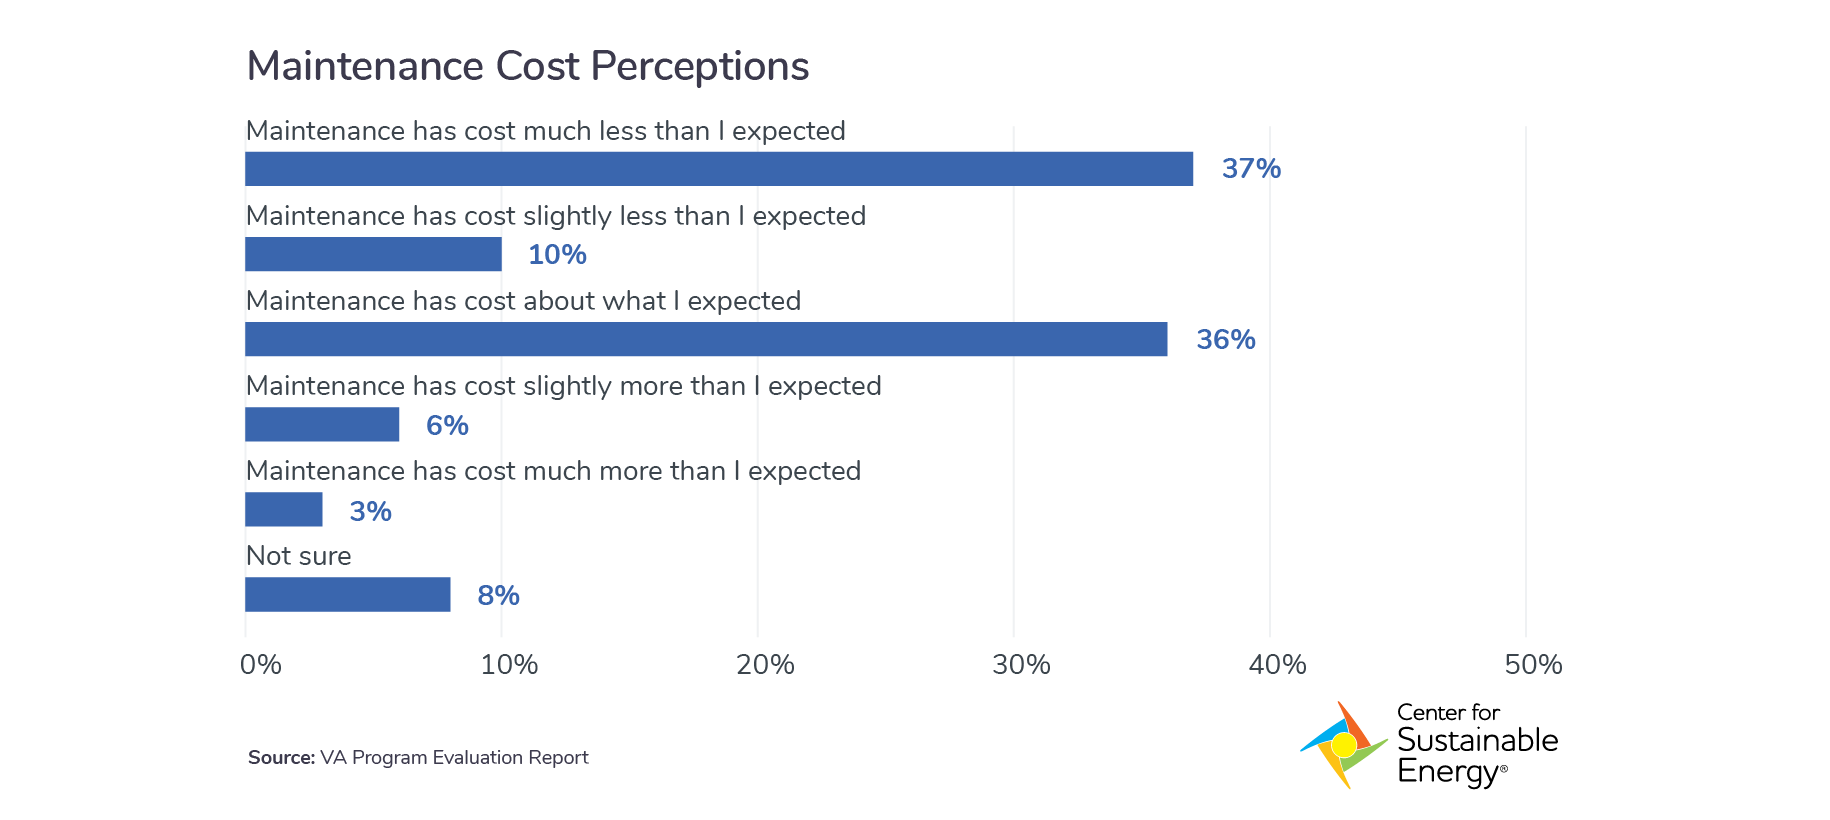 Figure 2. Maintenance cost perceptions (CVA Program Evaluation Report)